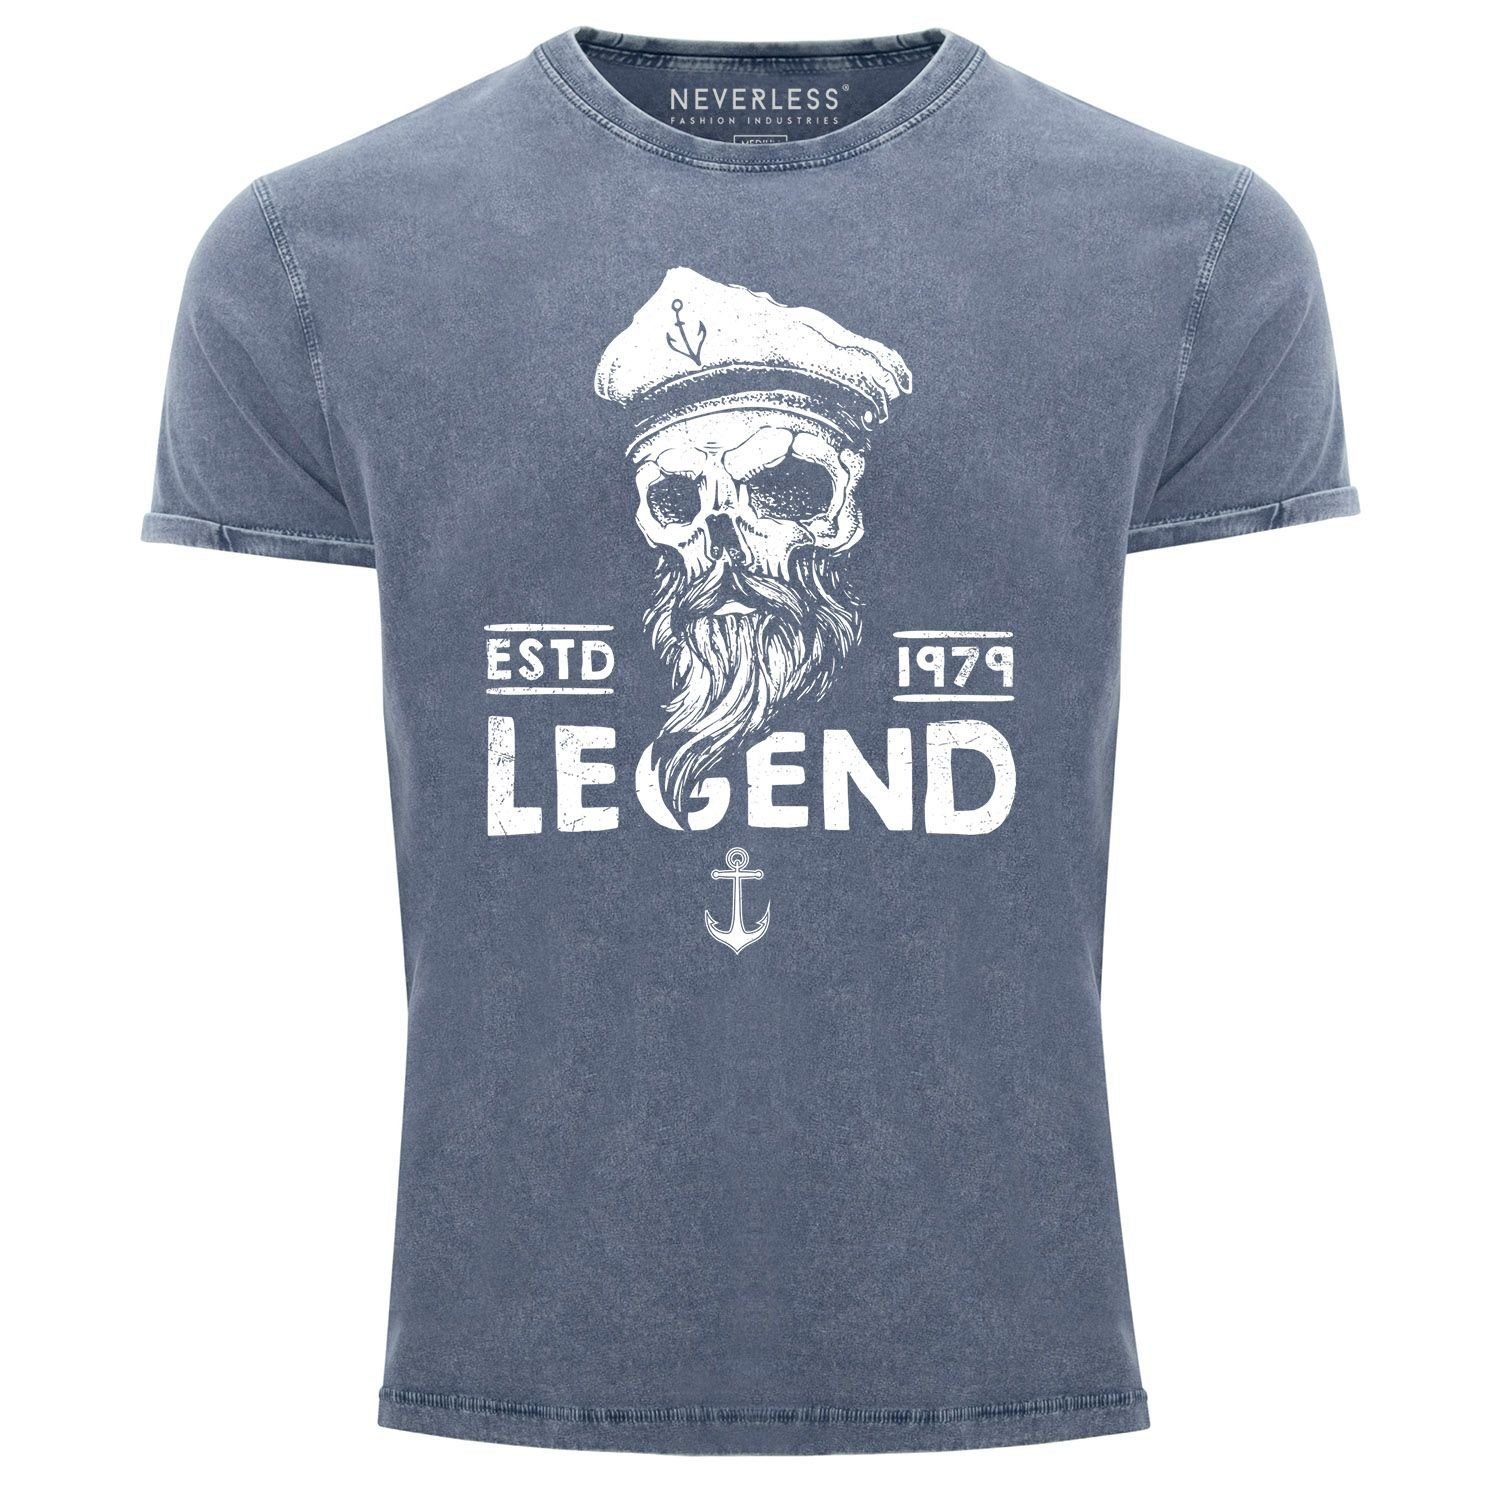 Neverless Print-Shirt Cooles Fit Totenkopf Neverless® Shirt Aufdruck blau Captain Used Herren Vintage mit Legend Slim Print Angesagtes T-Shirt Look